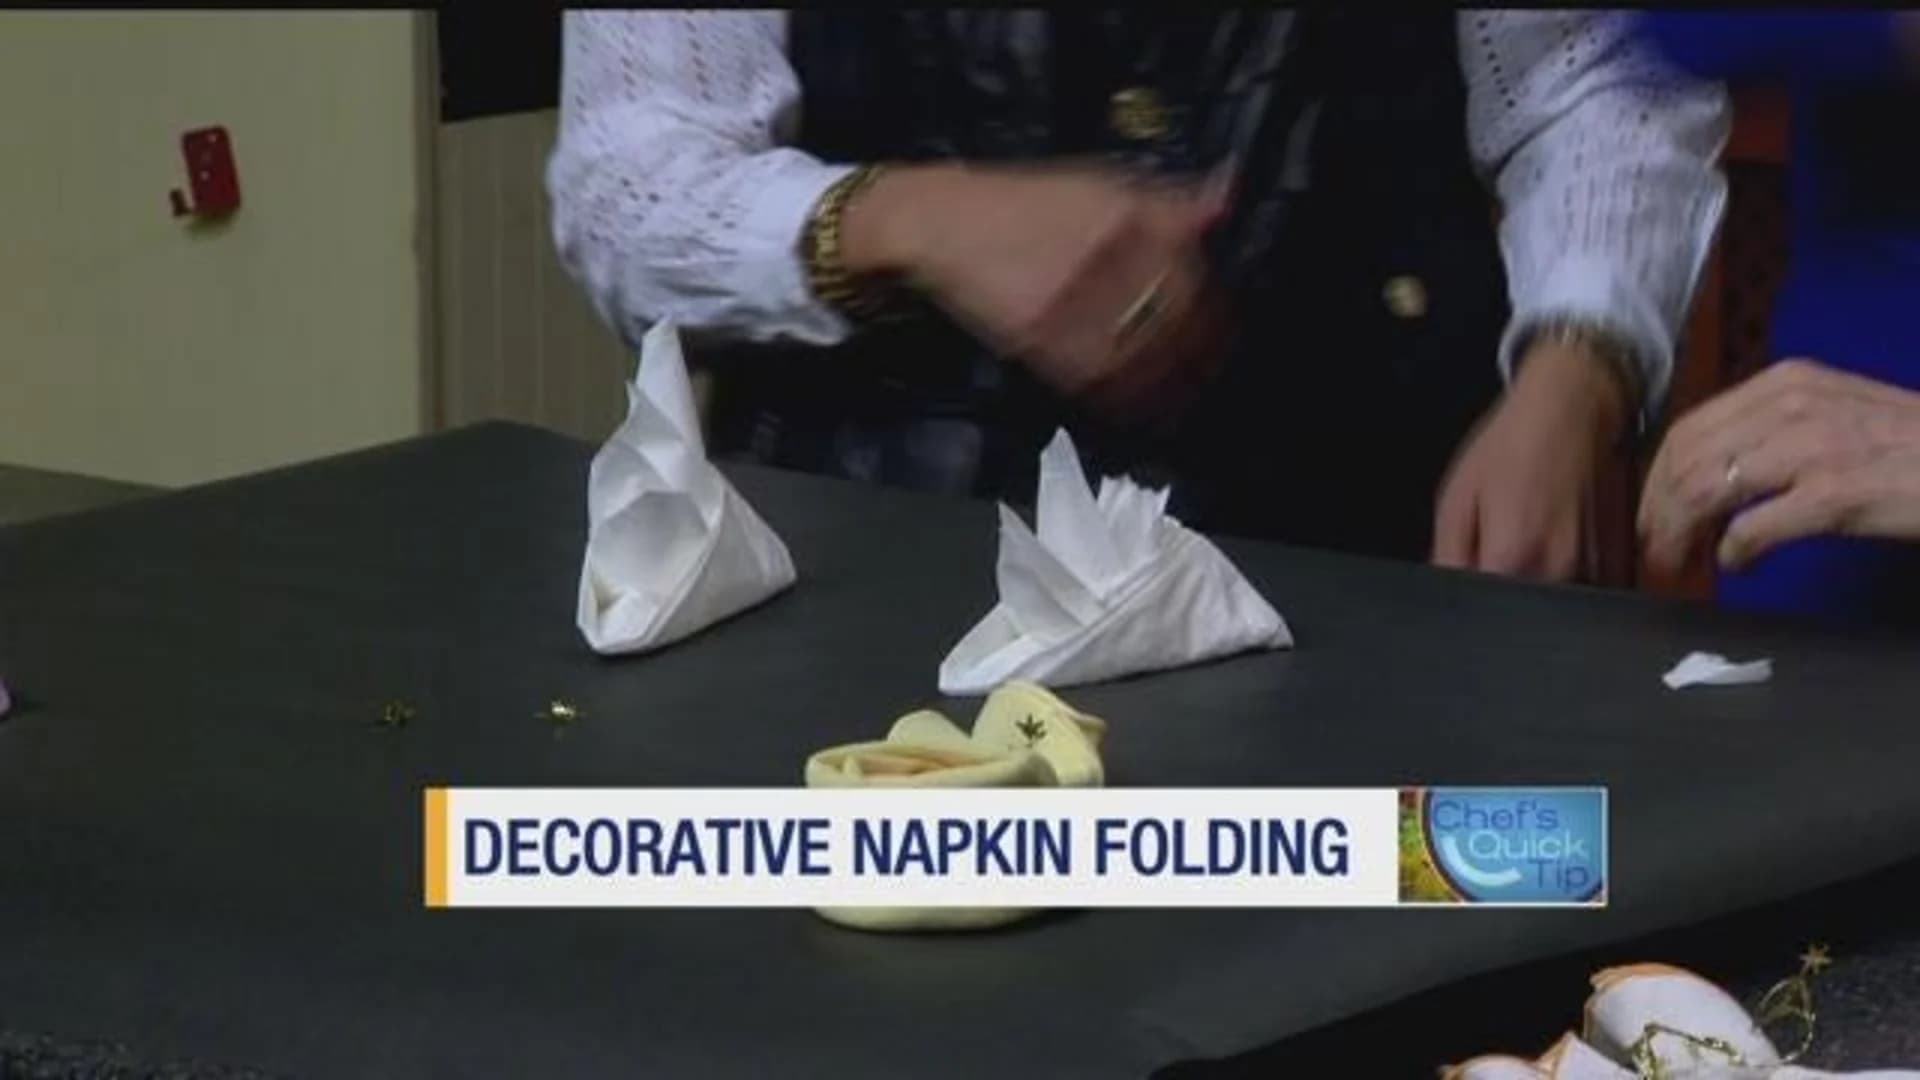 Quick Tips: Folding decorative napkins